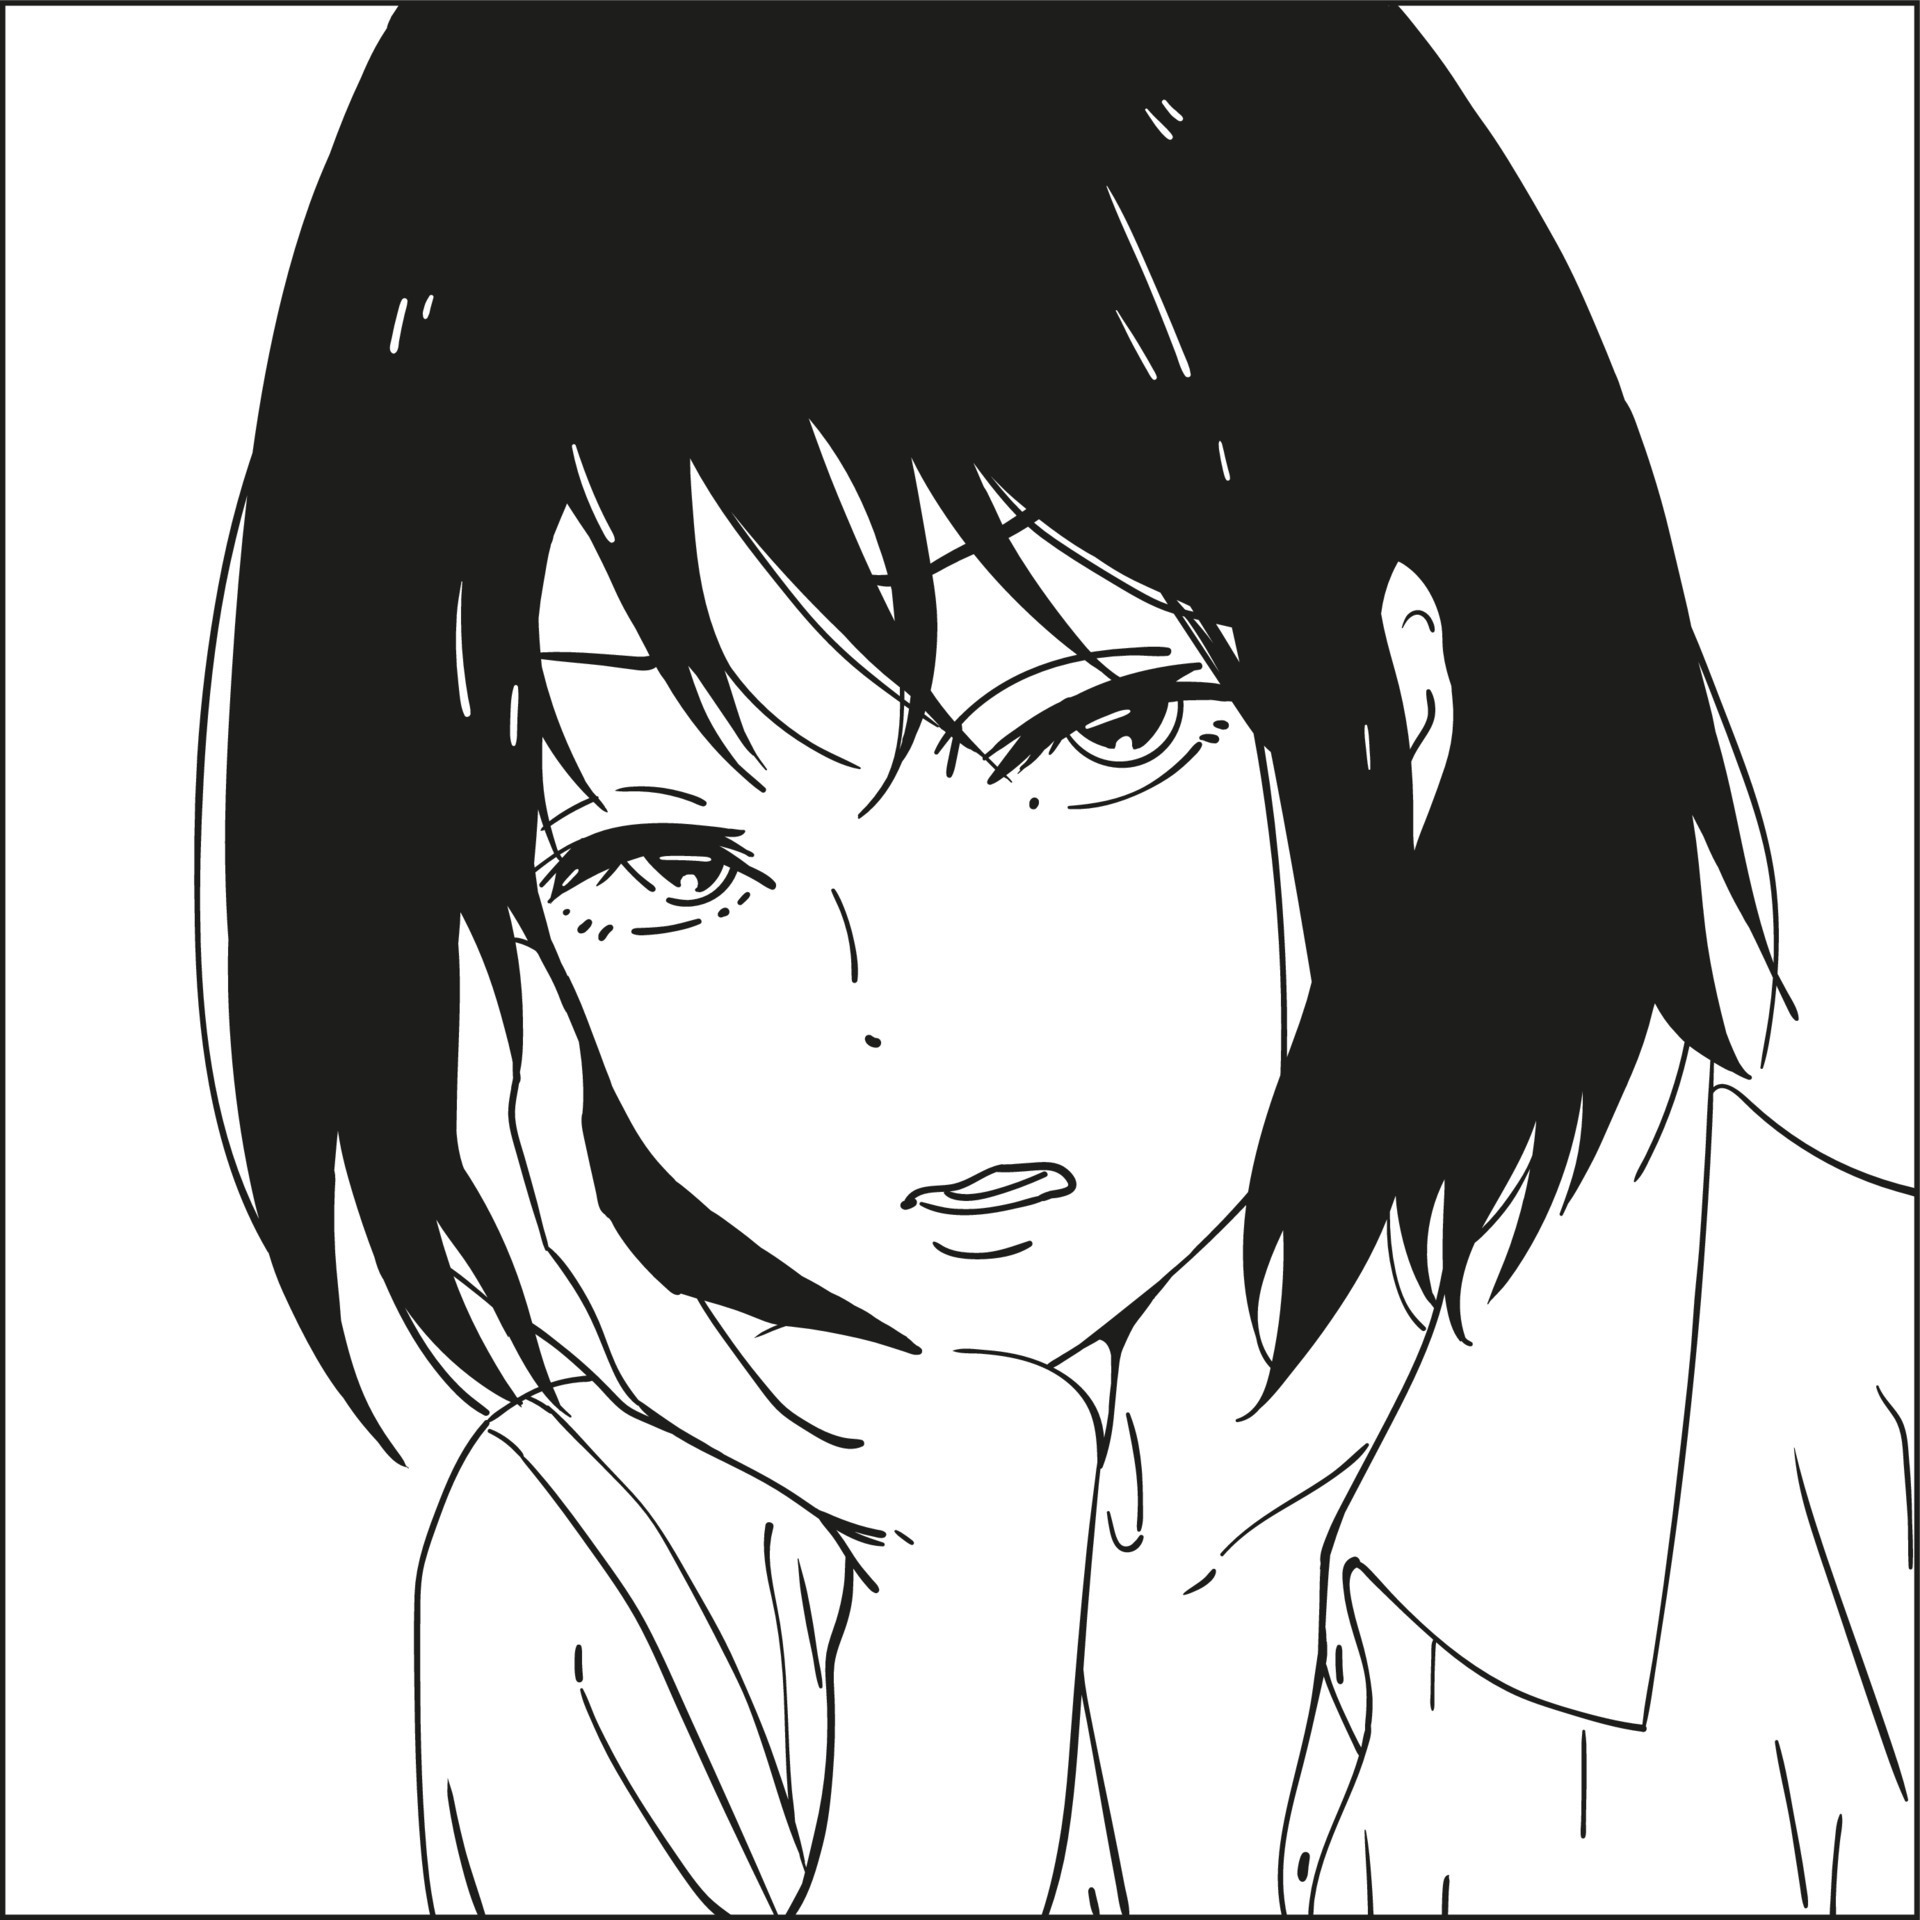 Premium Vector  Young girl anime style character vector illustration  design manga anime girl hair faces cartoon